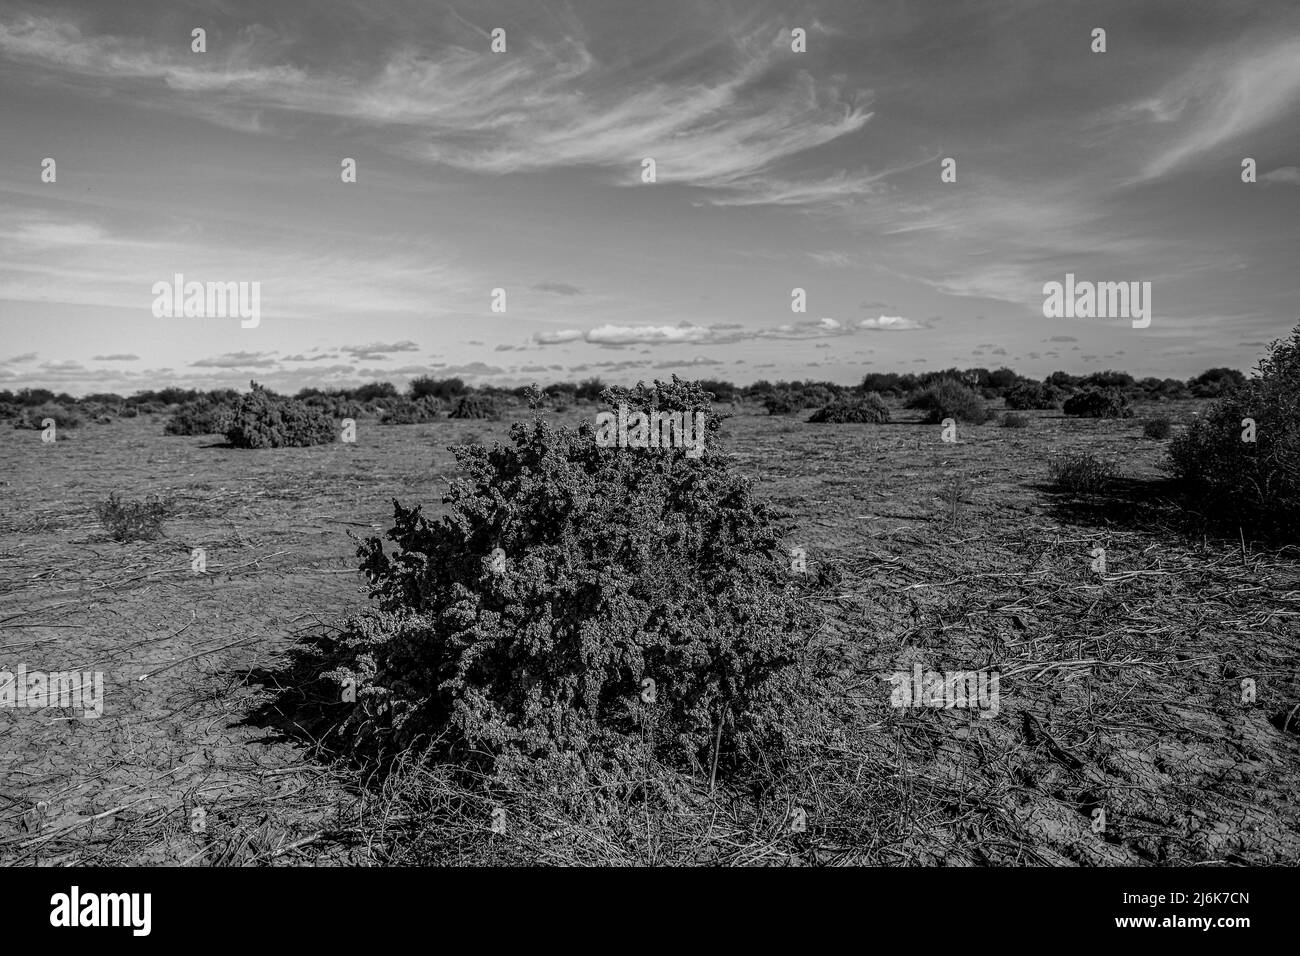 Arbusto Black and White Stock Photos & Images - Alamy